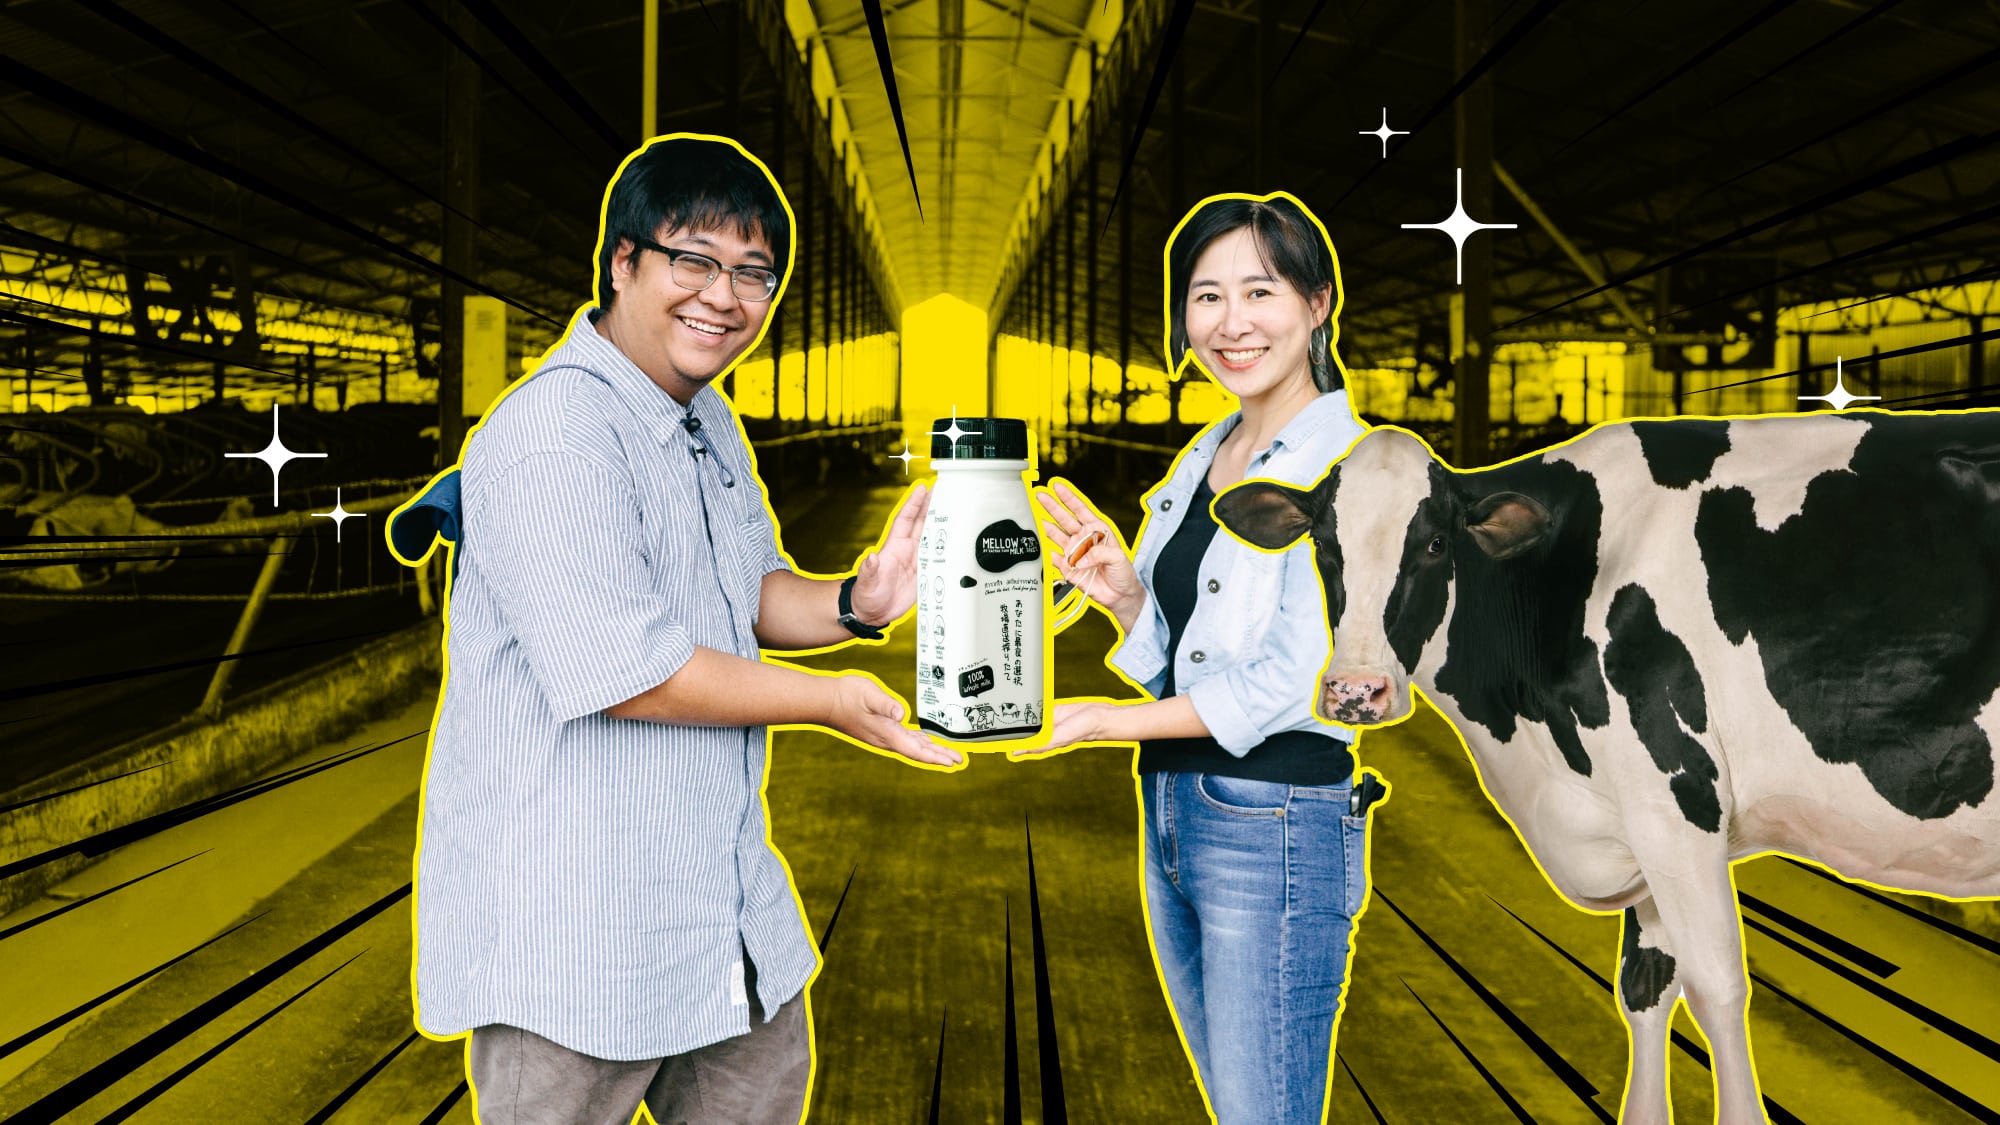 Smart Farmer ที่ผลิตนมโคด้วยเทคโนโลยี l Urban Journey เจอ ฟาร์มนมโฮมเมด